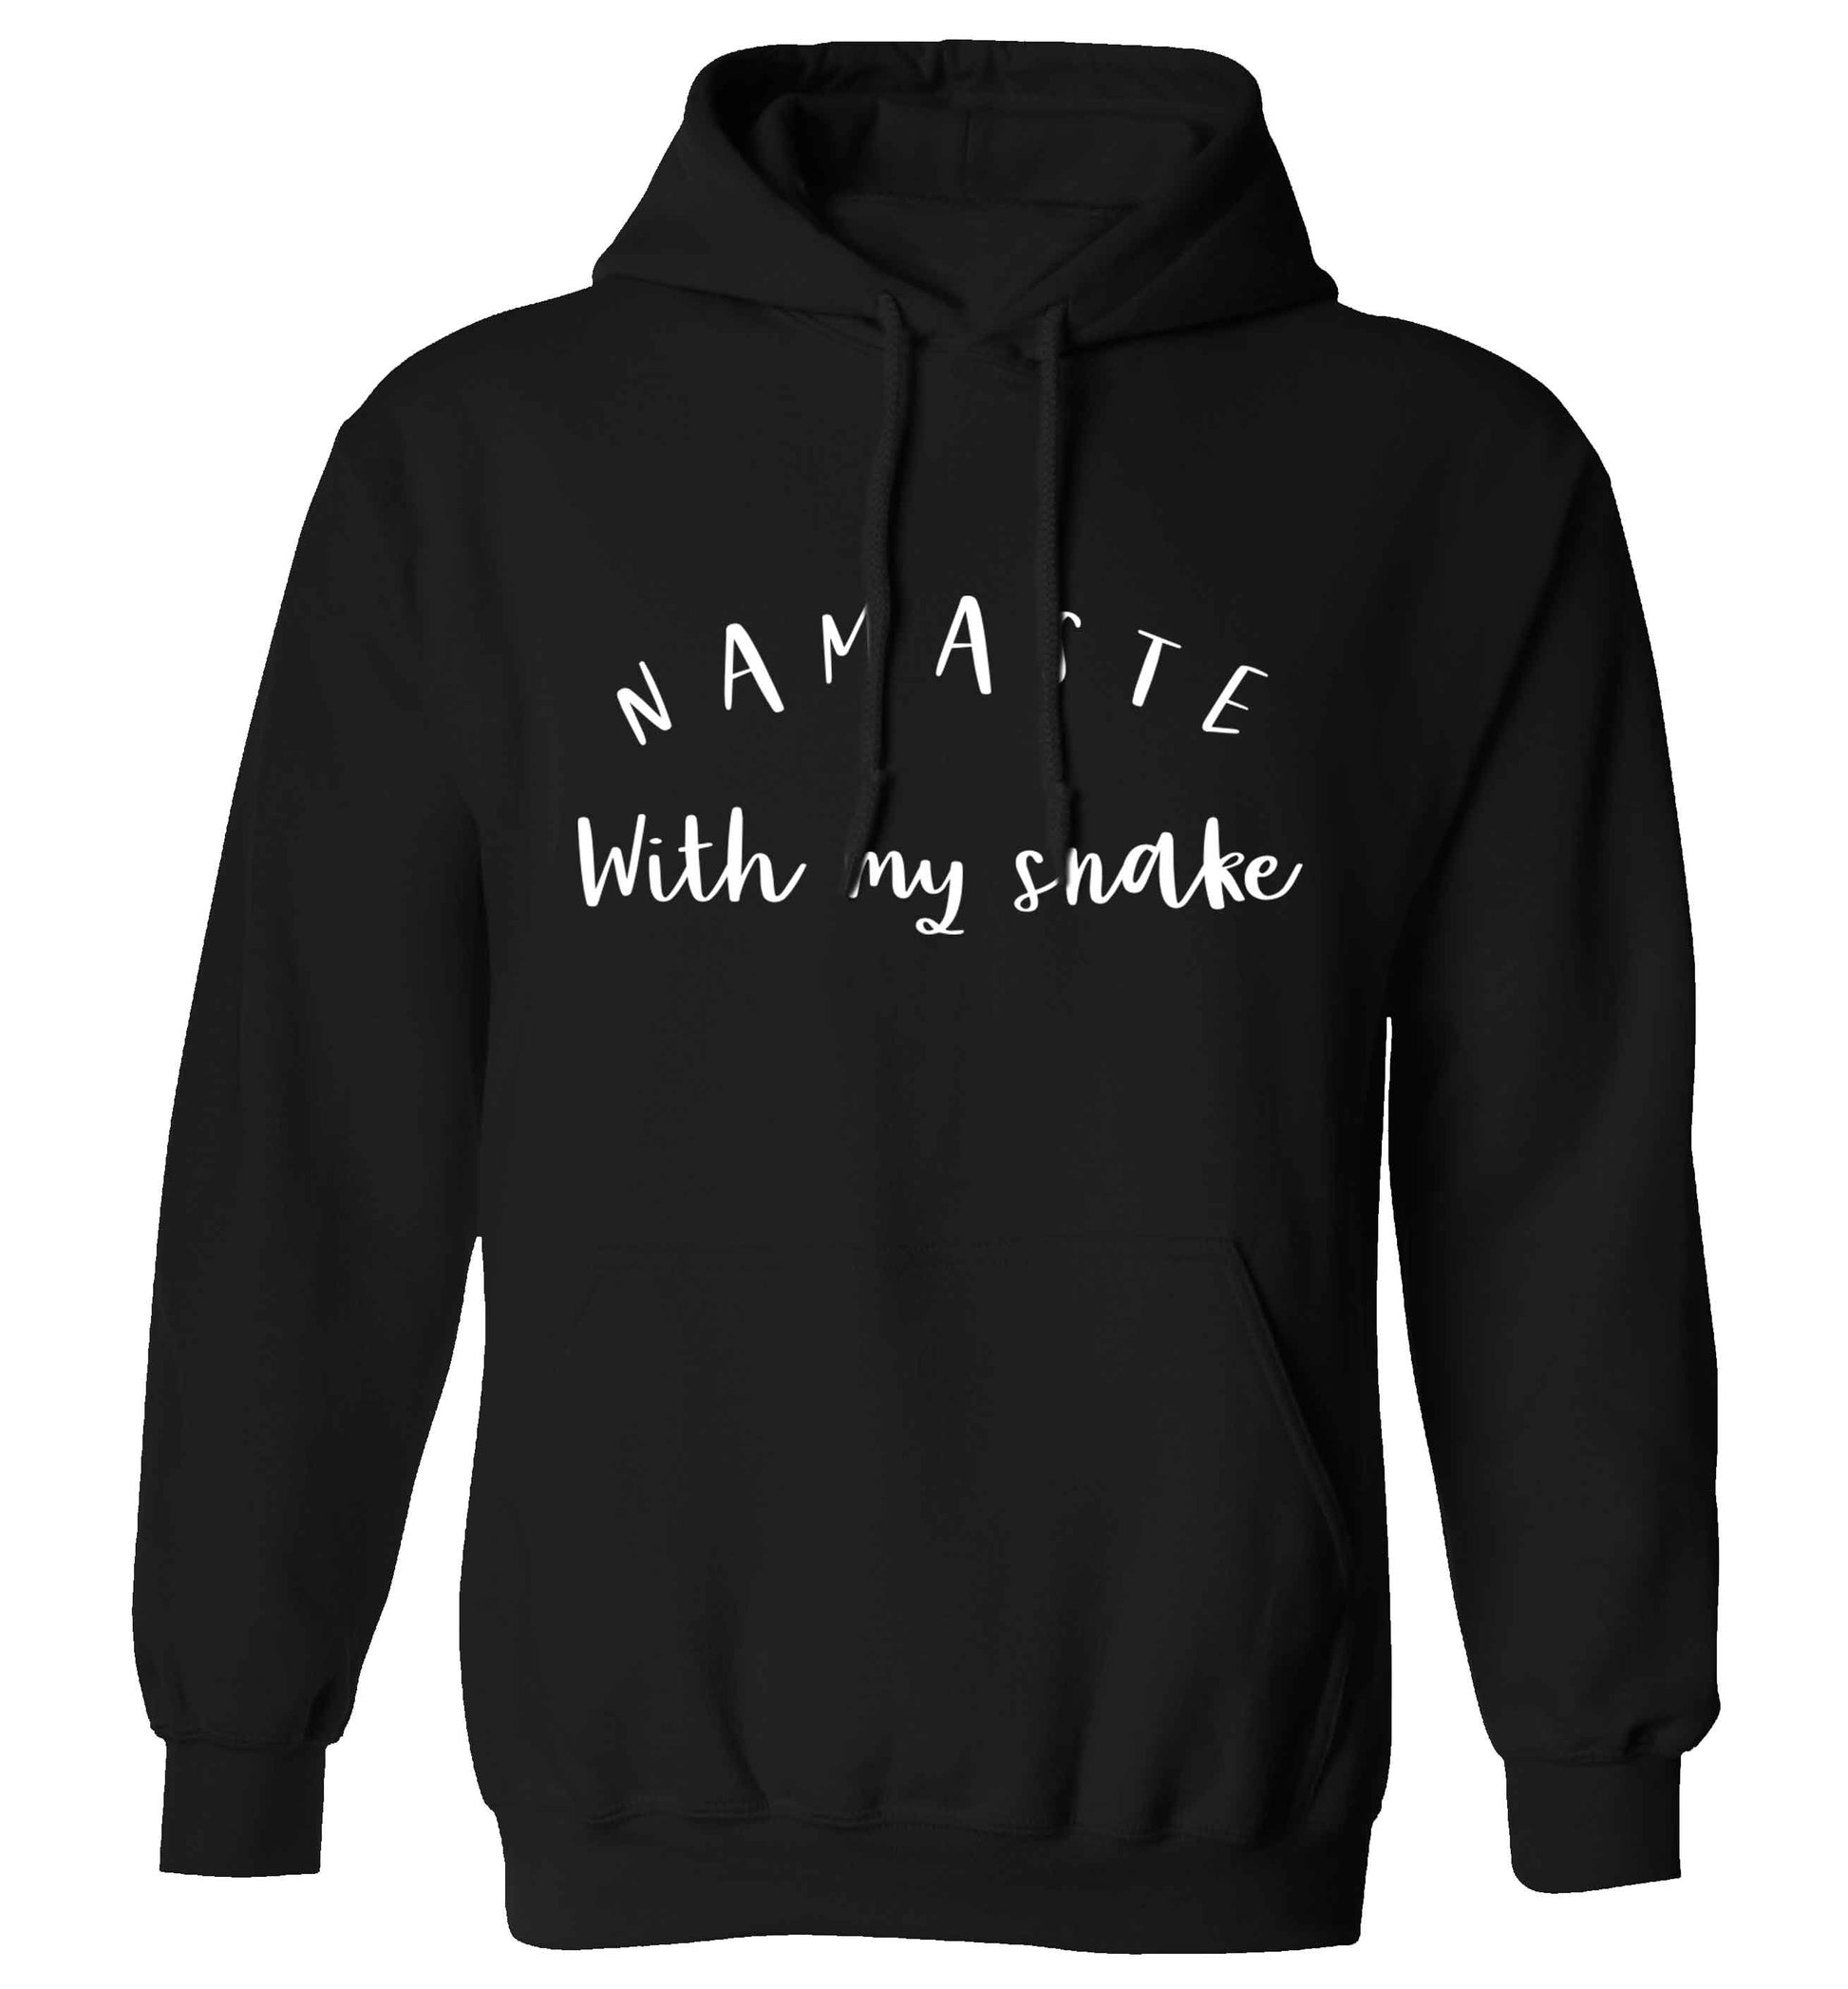 Namaste with my snake adults unisex black hoodie 2XL